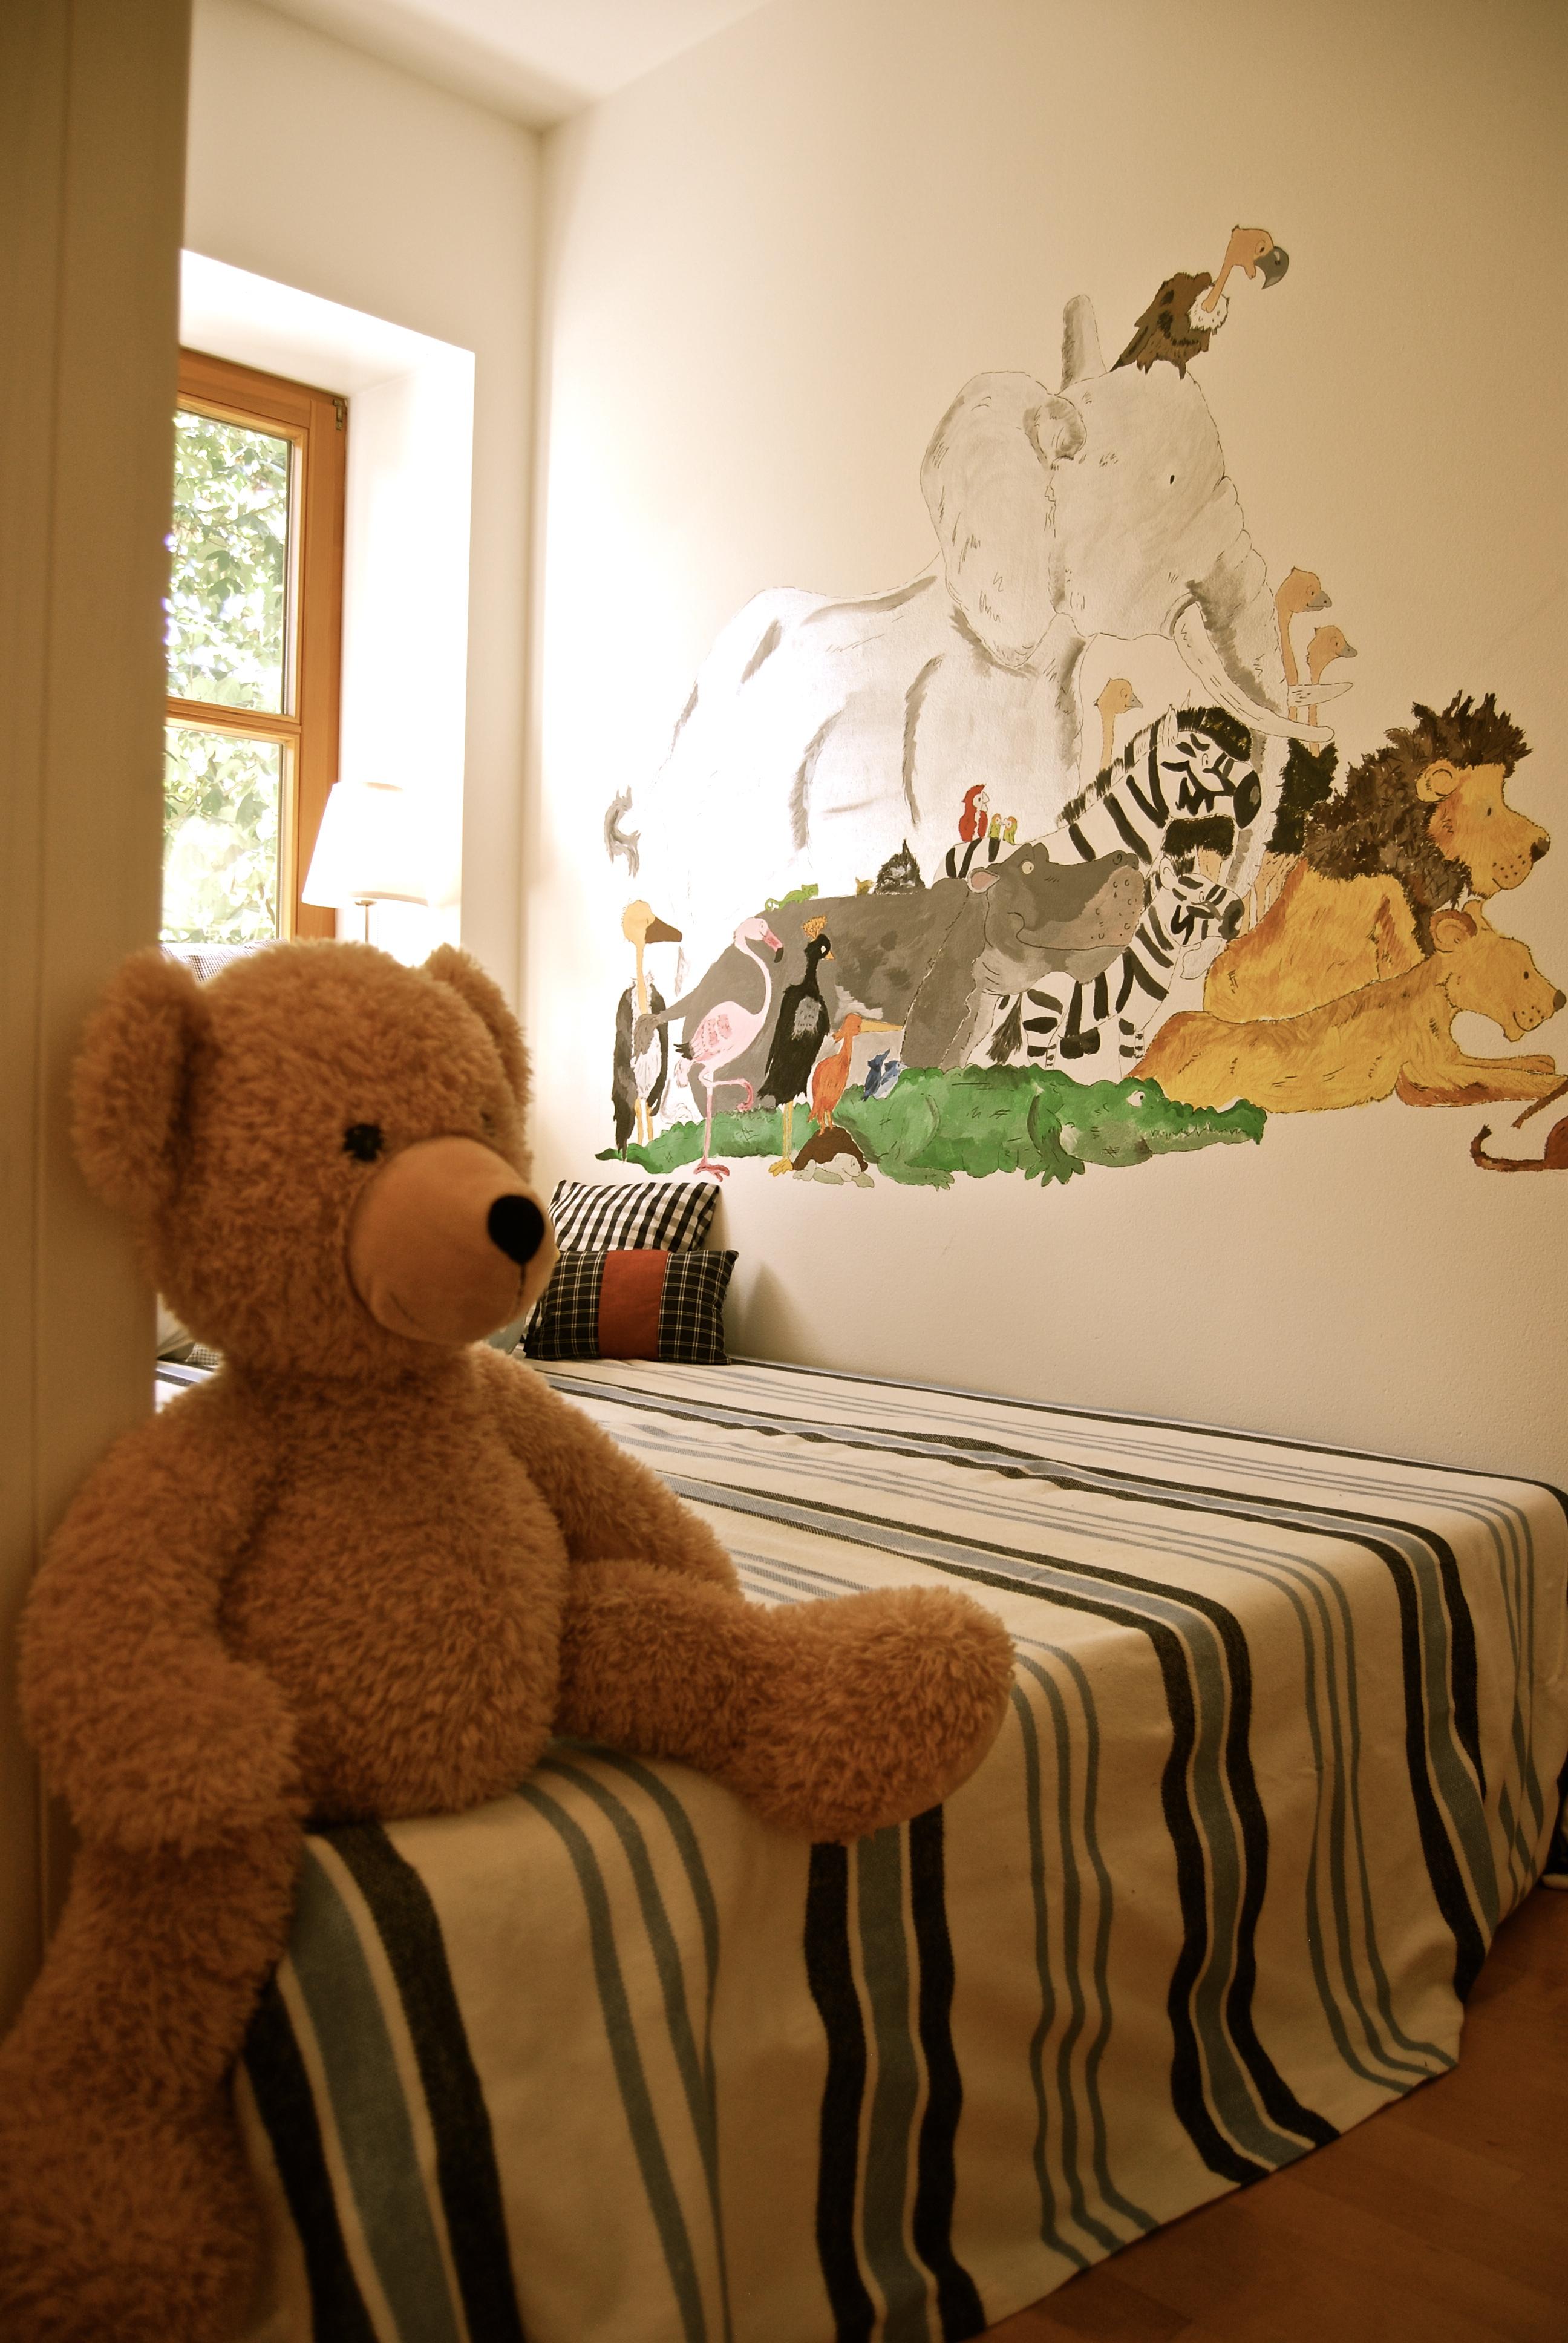 Kinderzimmer mit Wandbild "Safari" #wandbemalung #handarbeit ©Andrea Stolberg - Raum für Wunder